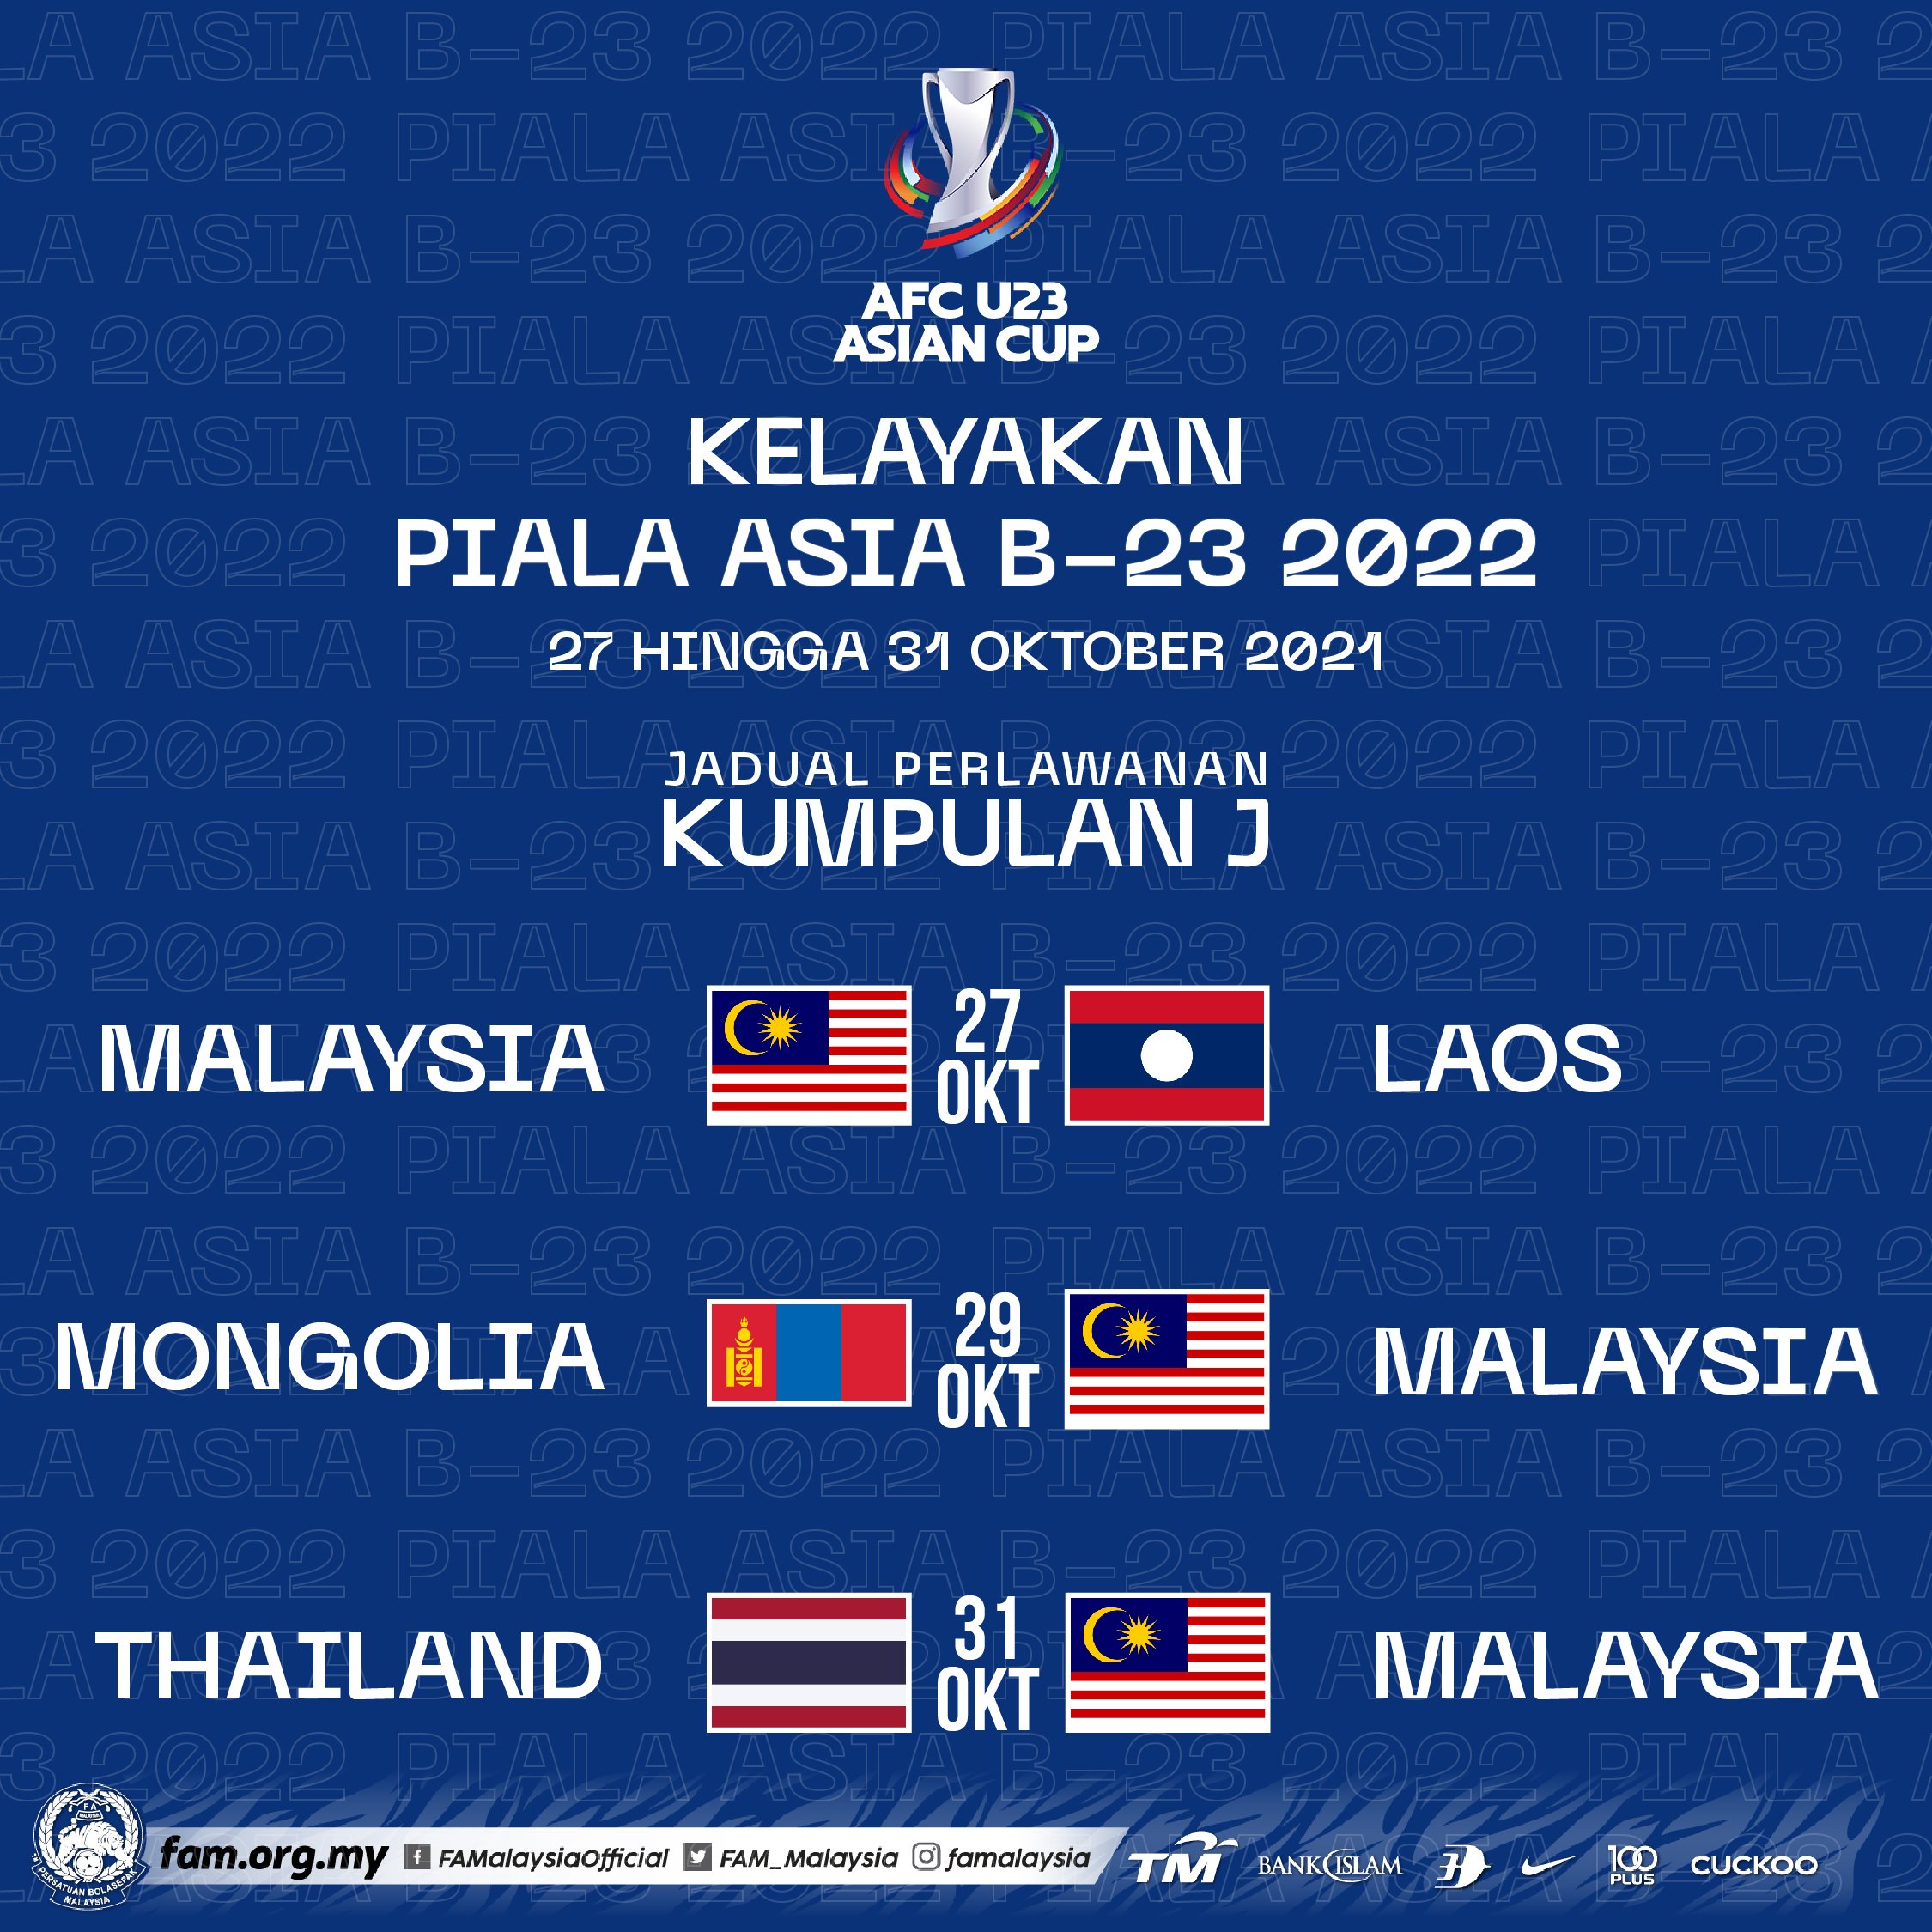 Jadual piala fa malaysia 2022